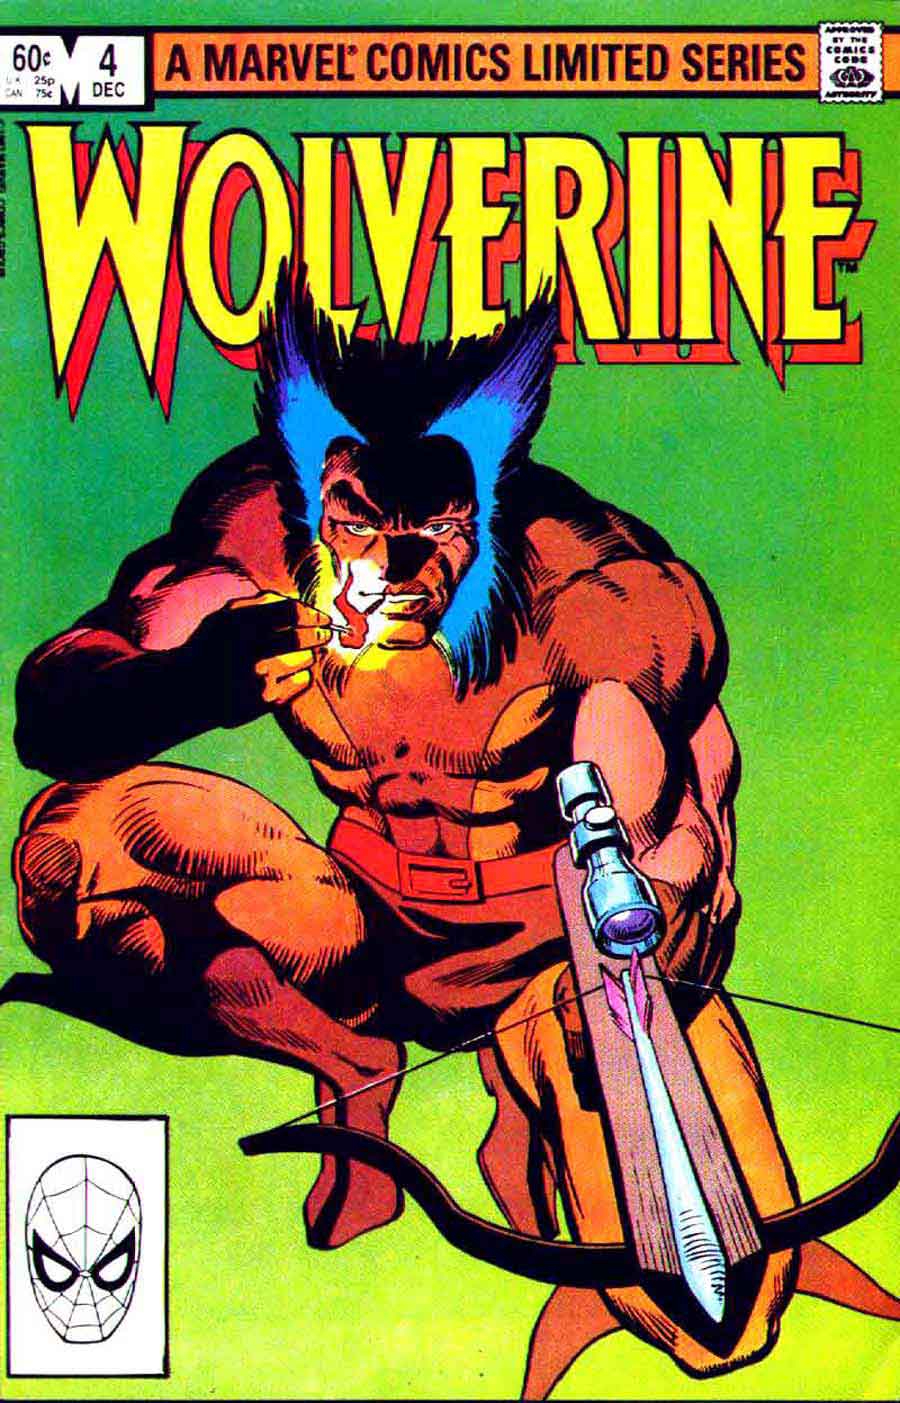 Wolverine v1 #2 1980s marvel comic book cover art by Frank Miller